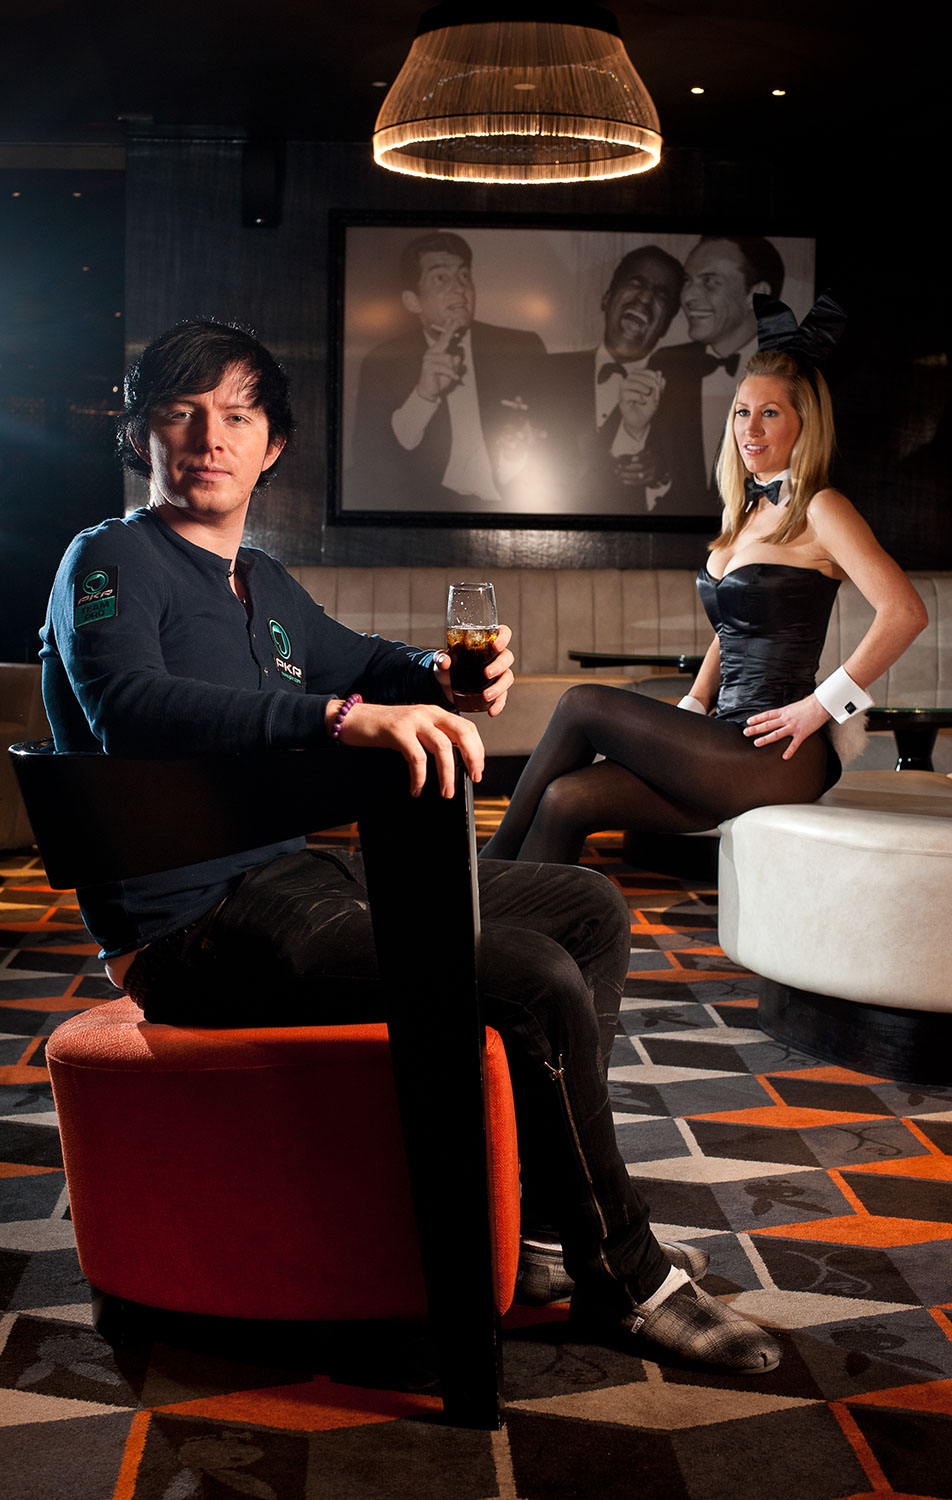 Photoshoot for Poker Player magazine at Playboy Club London